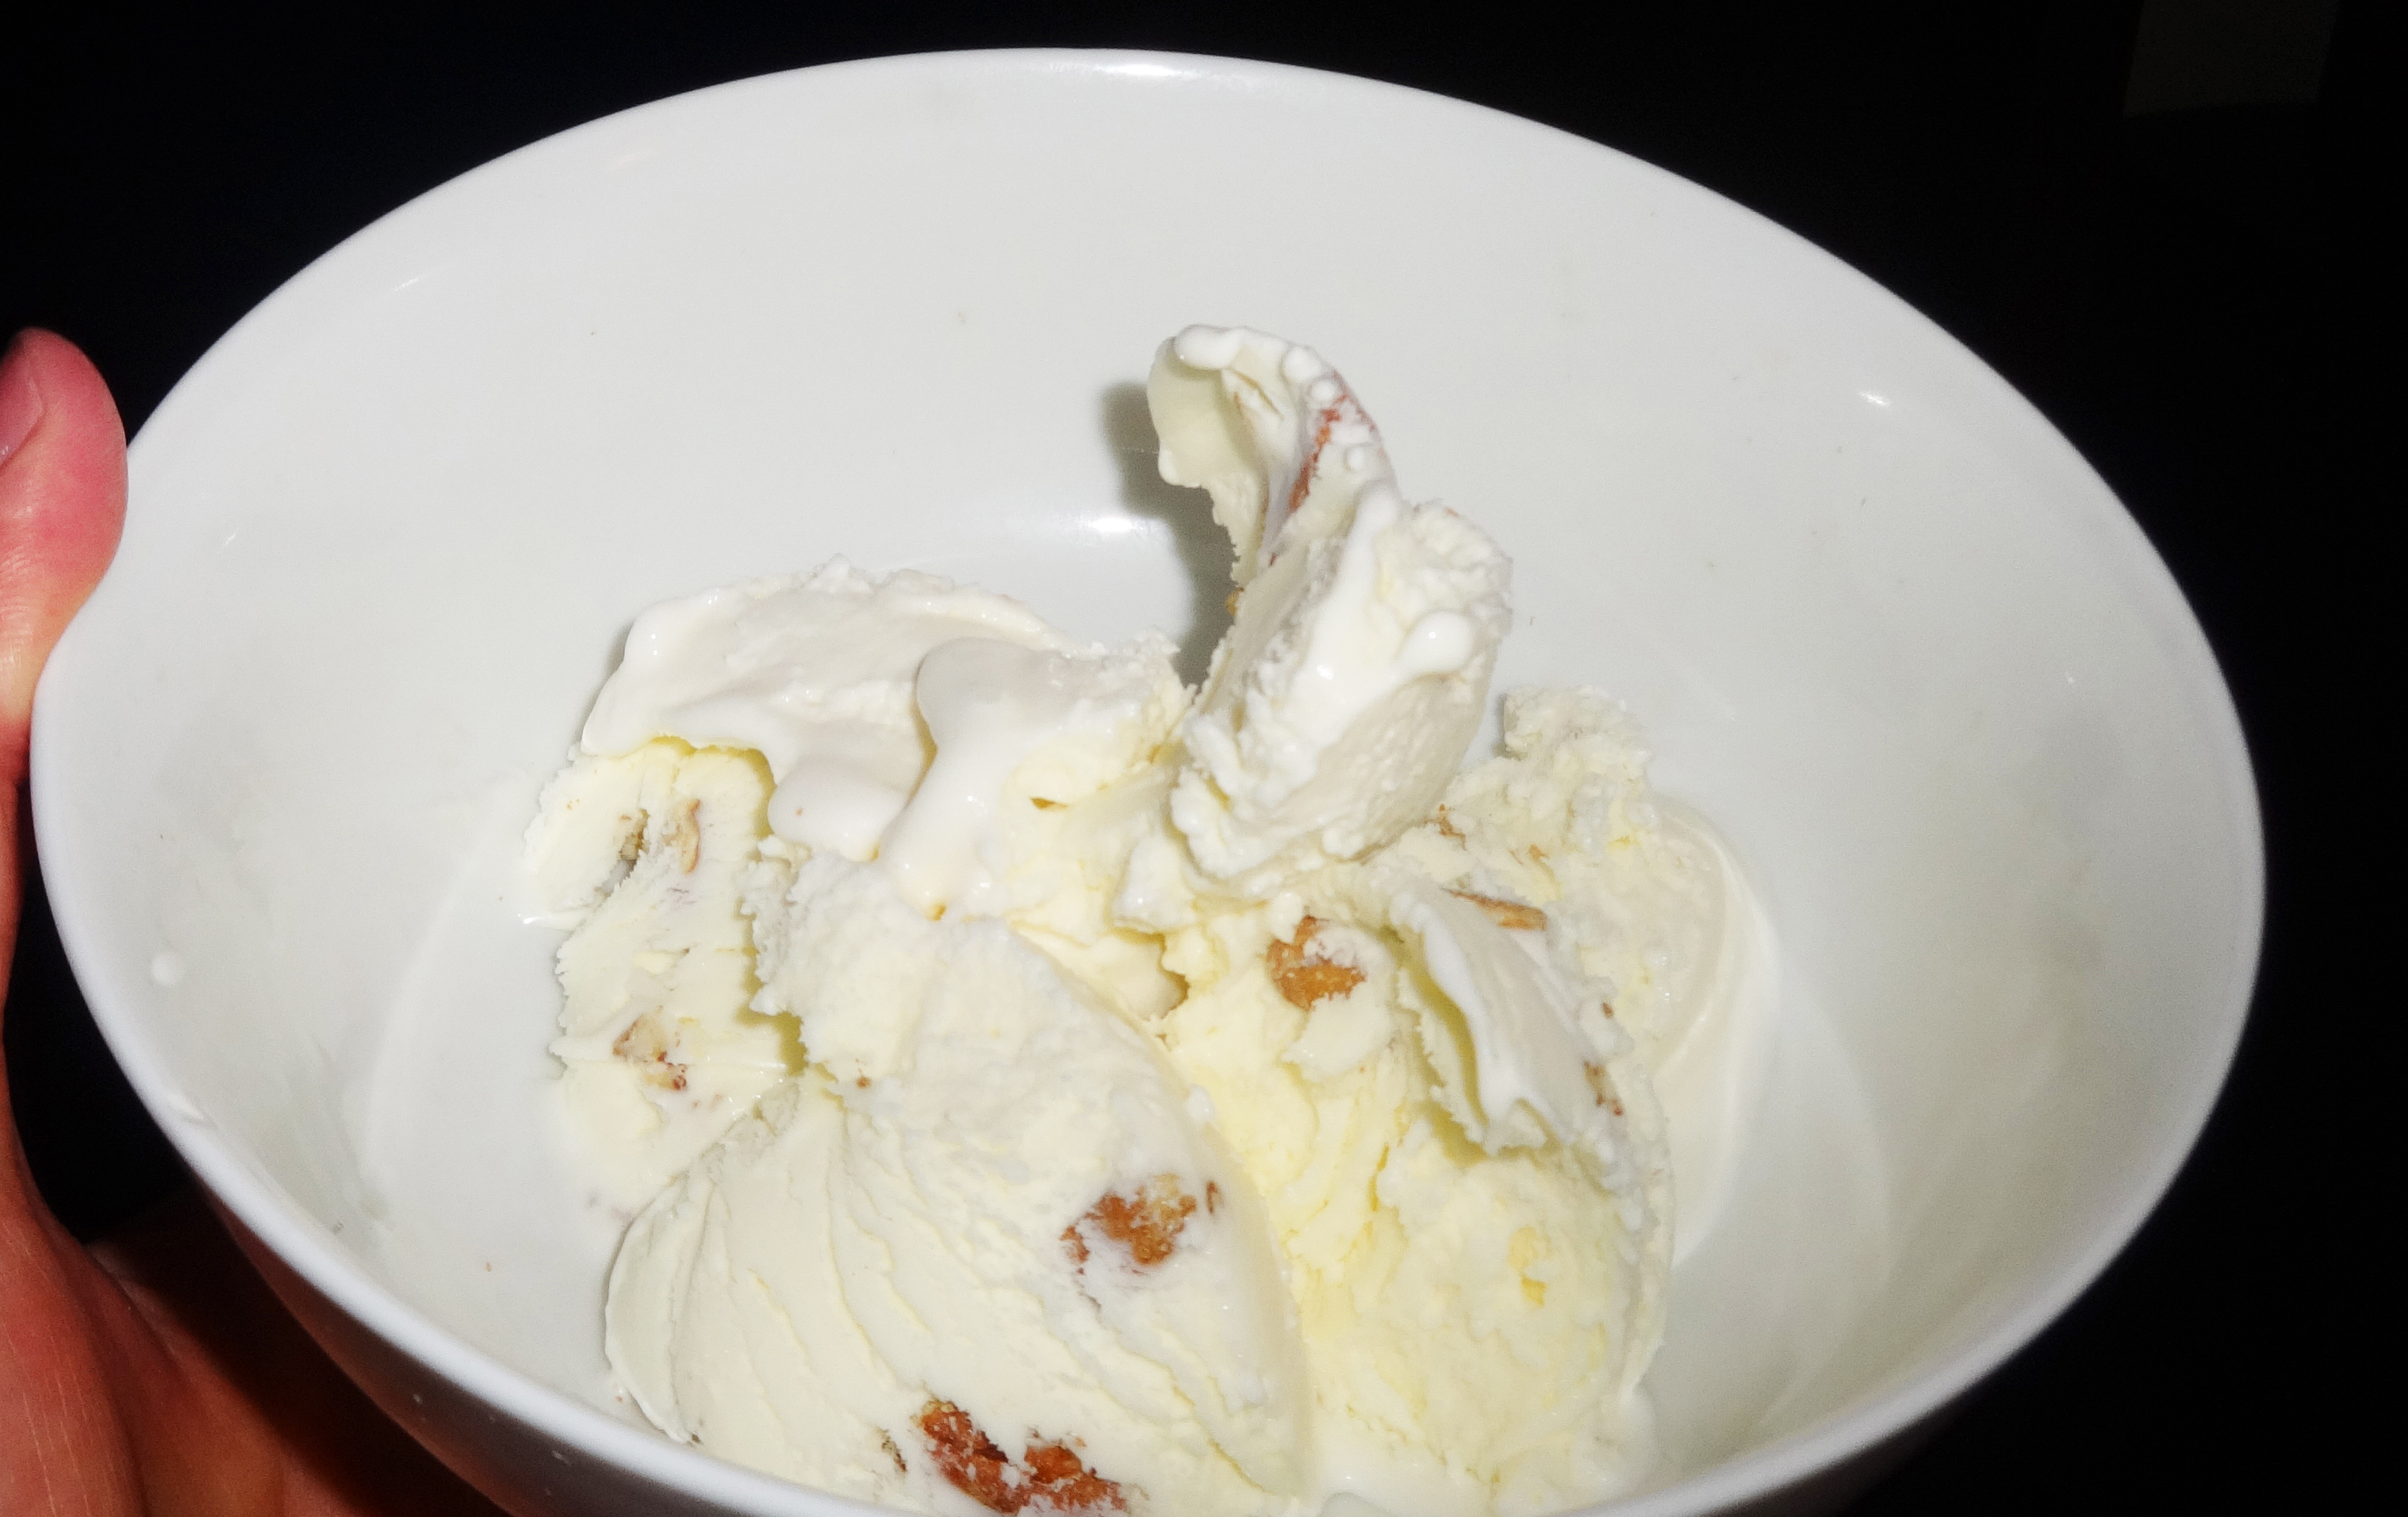 Jenis ice cream in bowl